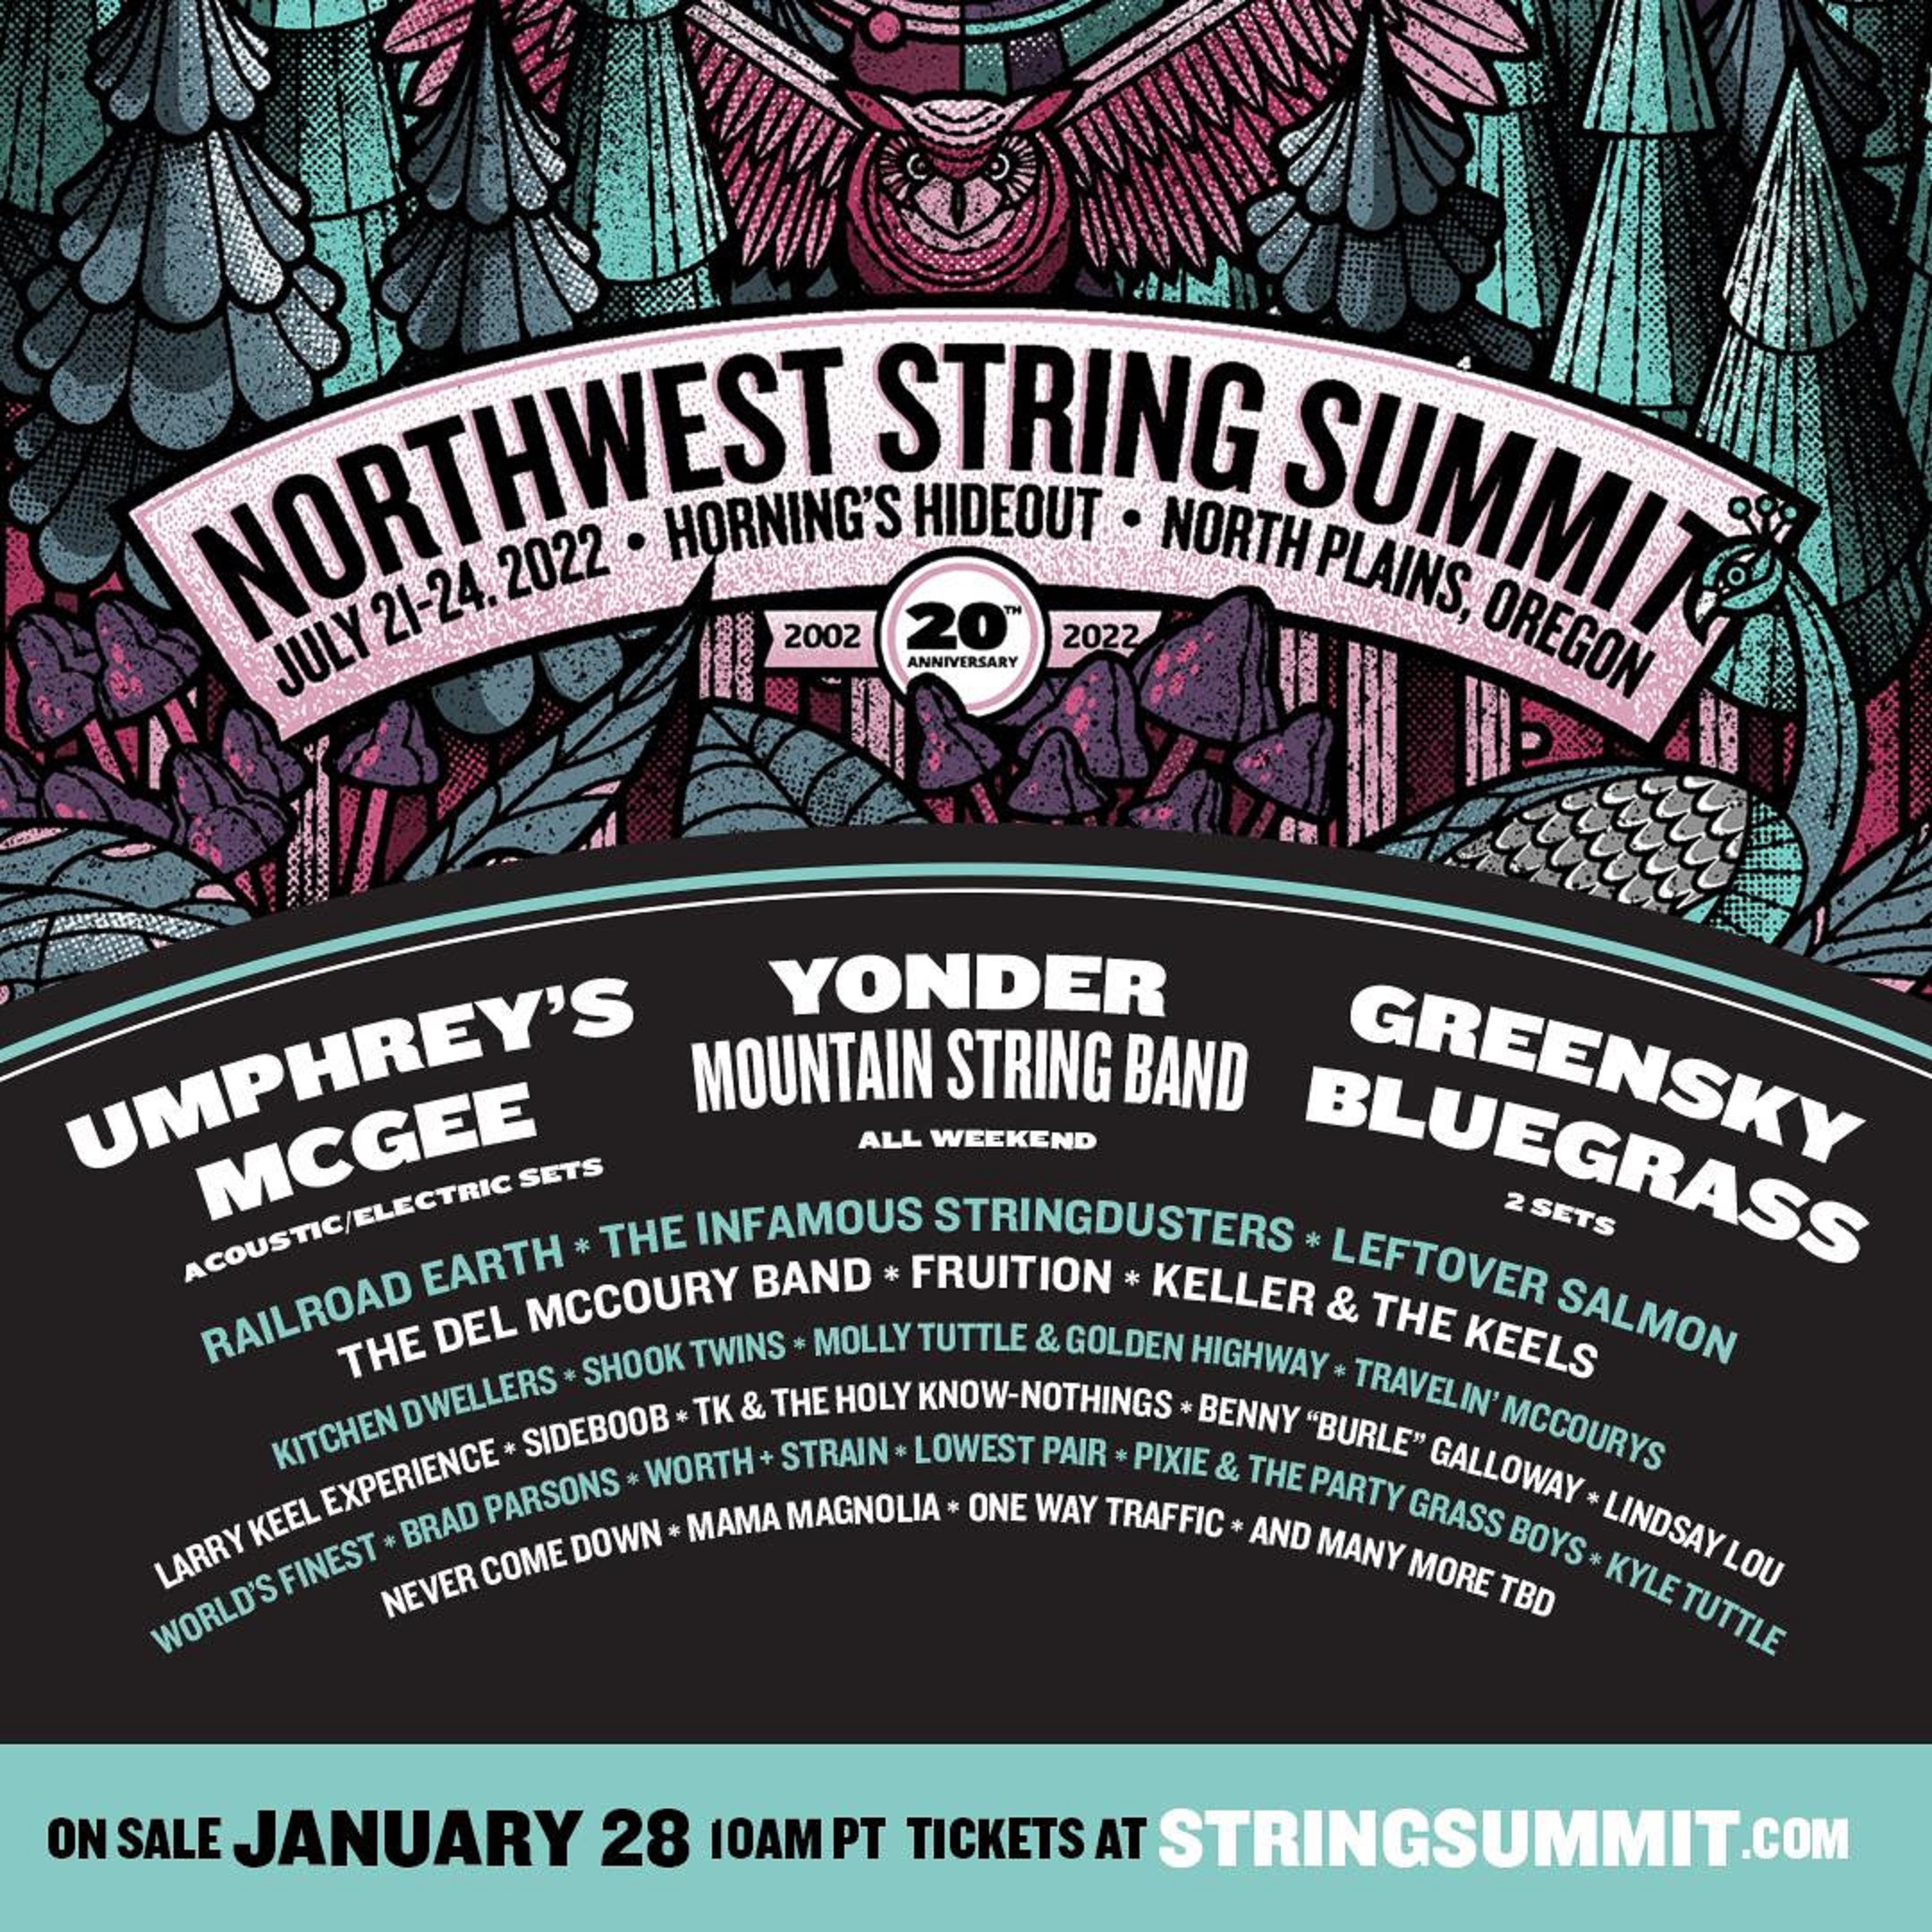 Northwest String Summit Makes Grand Return For 20th Anniversary Festival